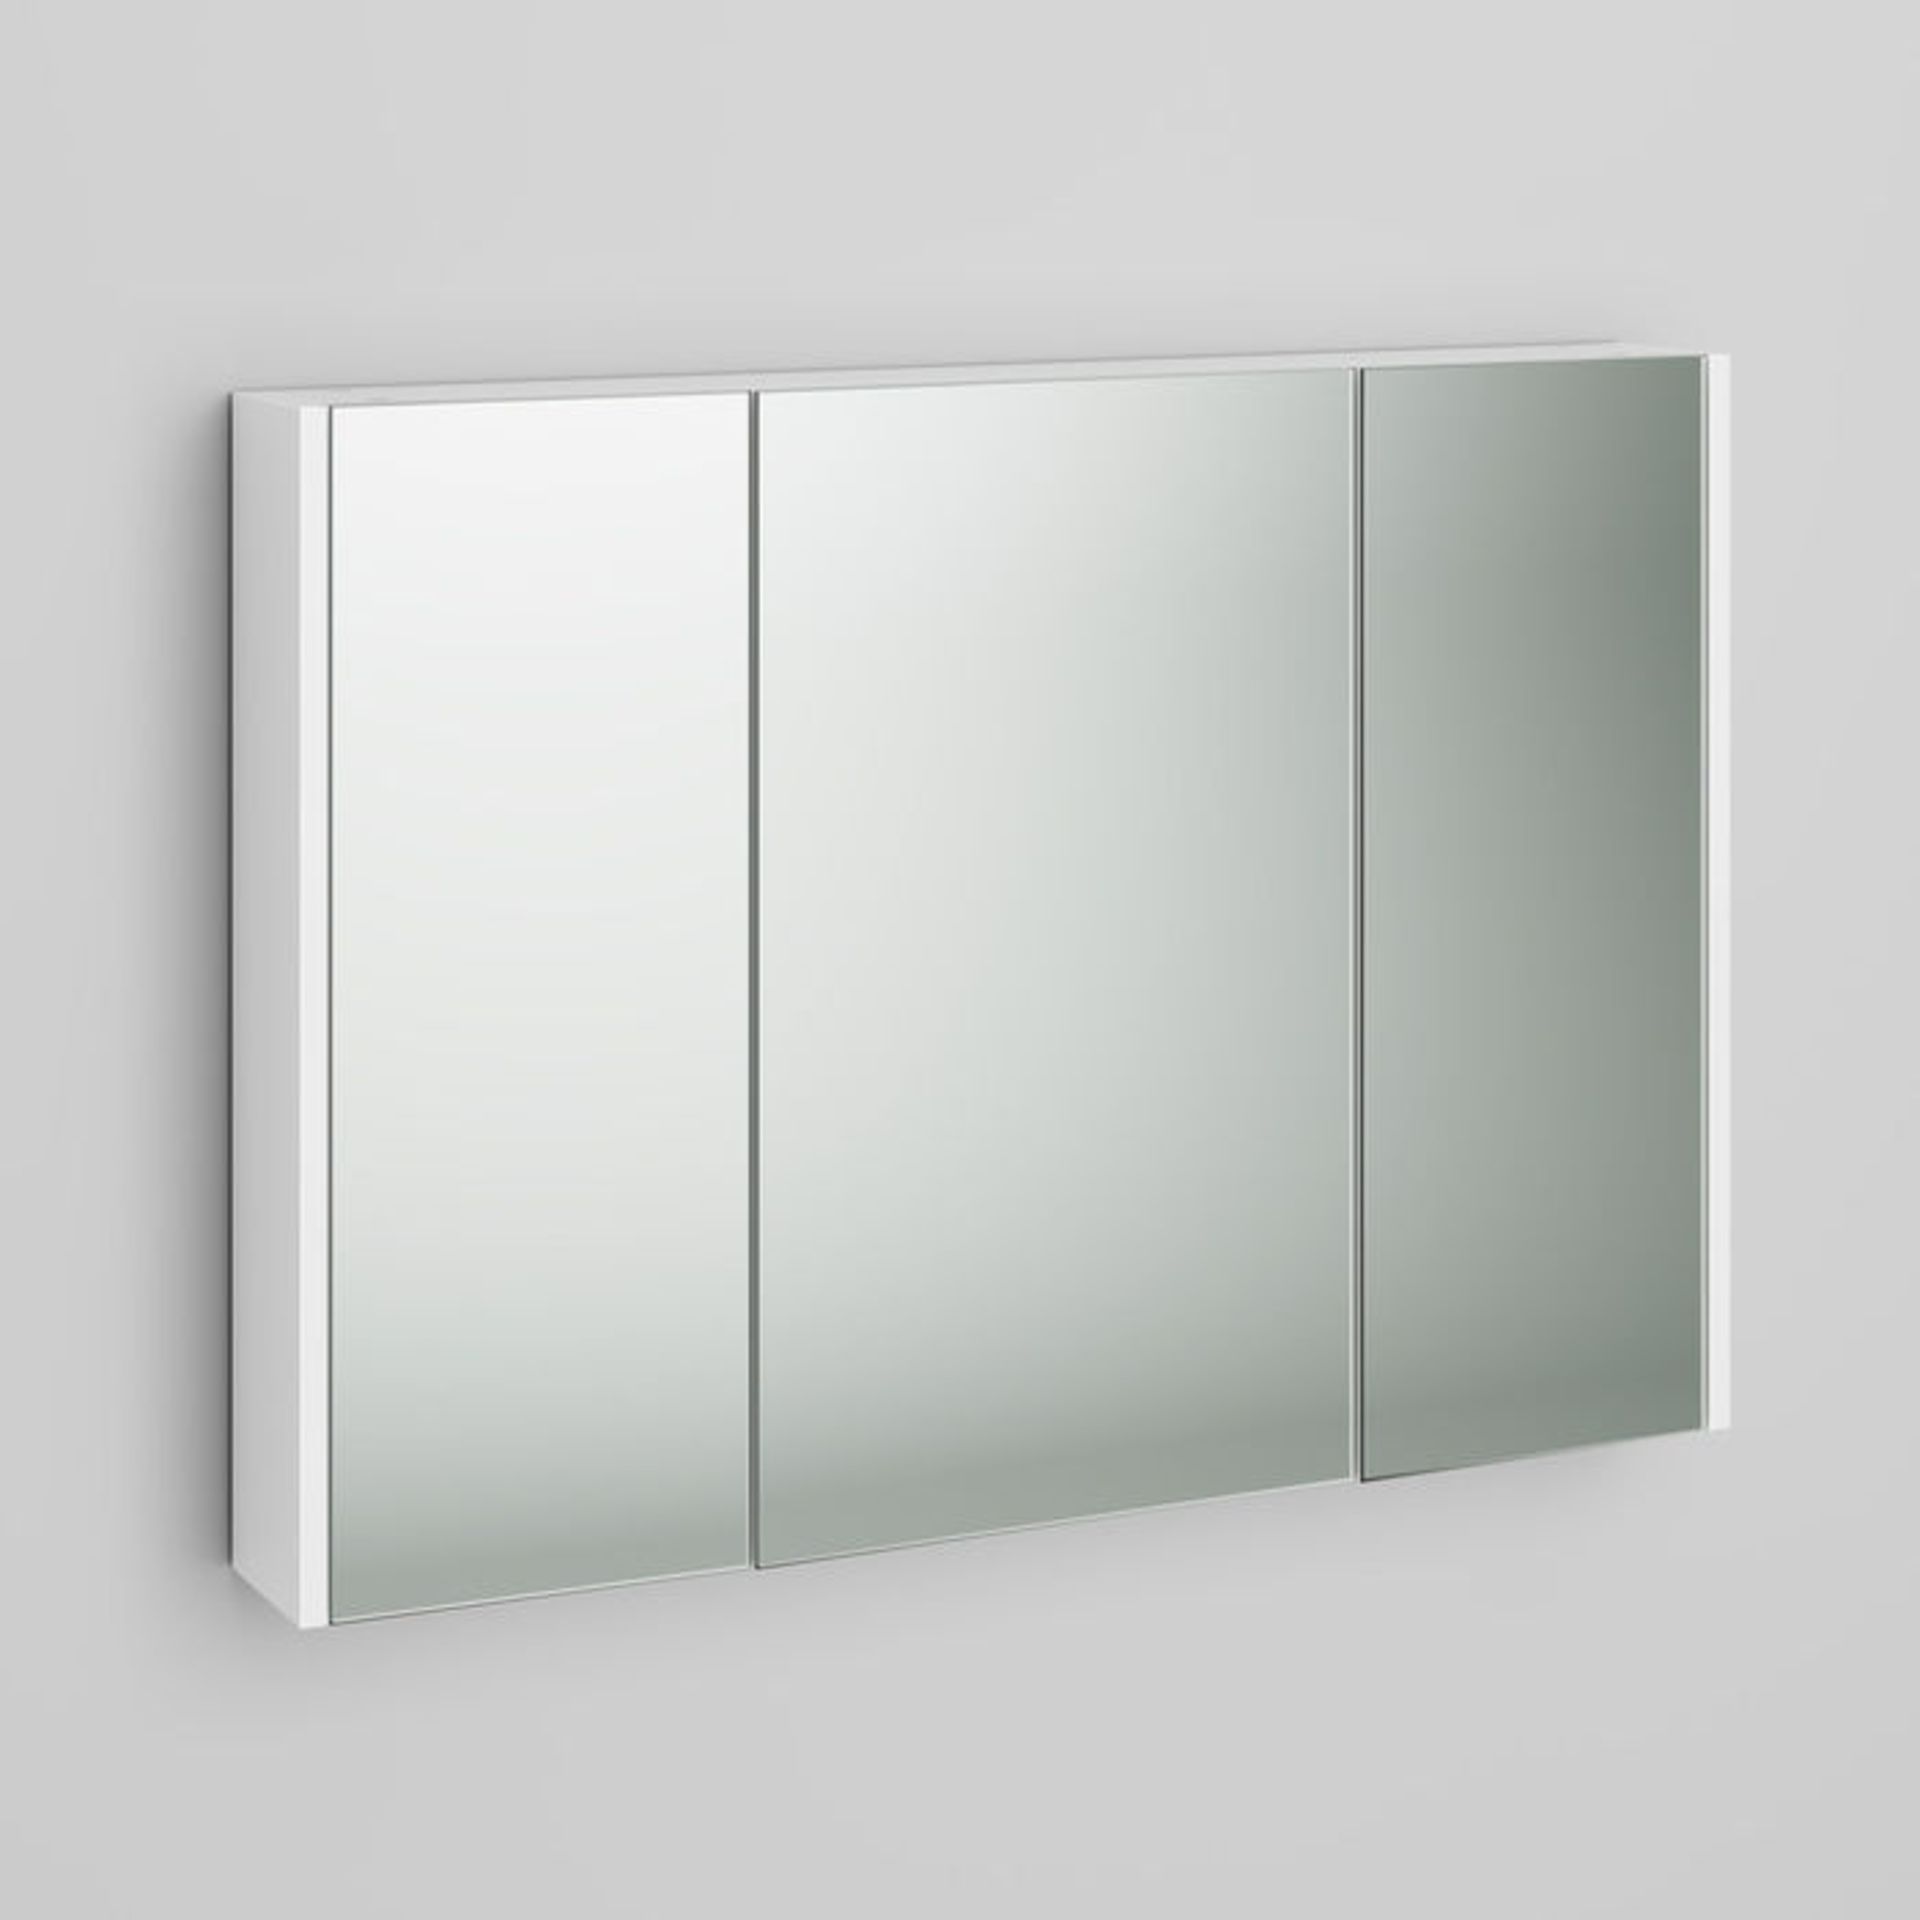 (TA169) 900mm Gloss White Triple Door Mirror Cabinet. RRP £299.99. Sleek contemporary design - Image 3 of 4